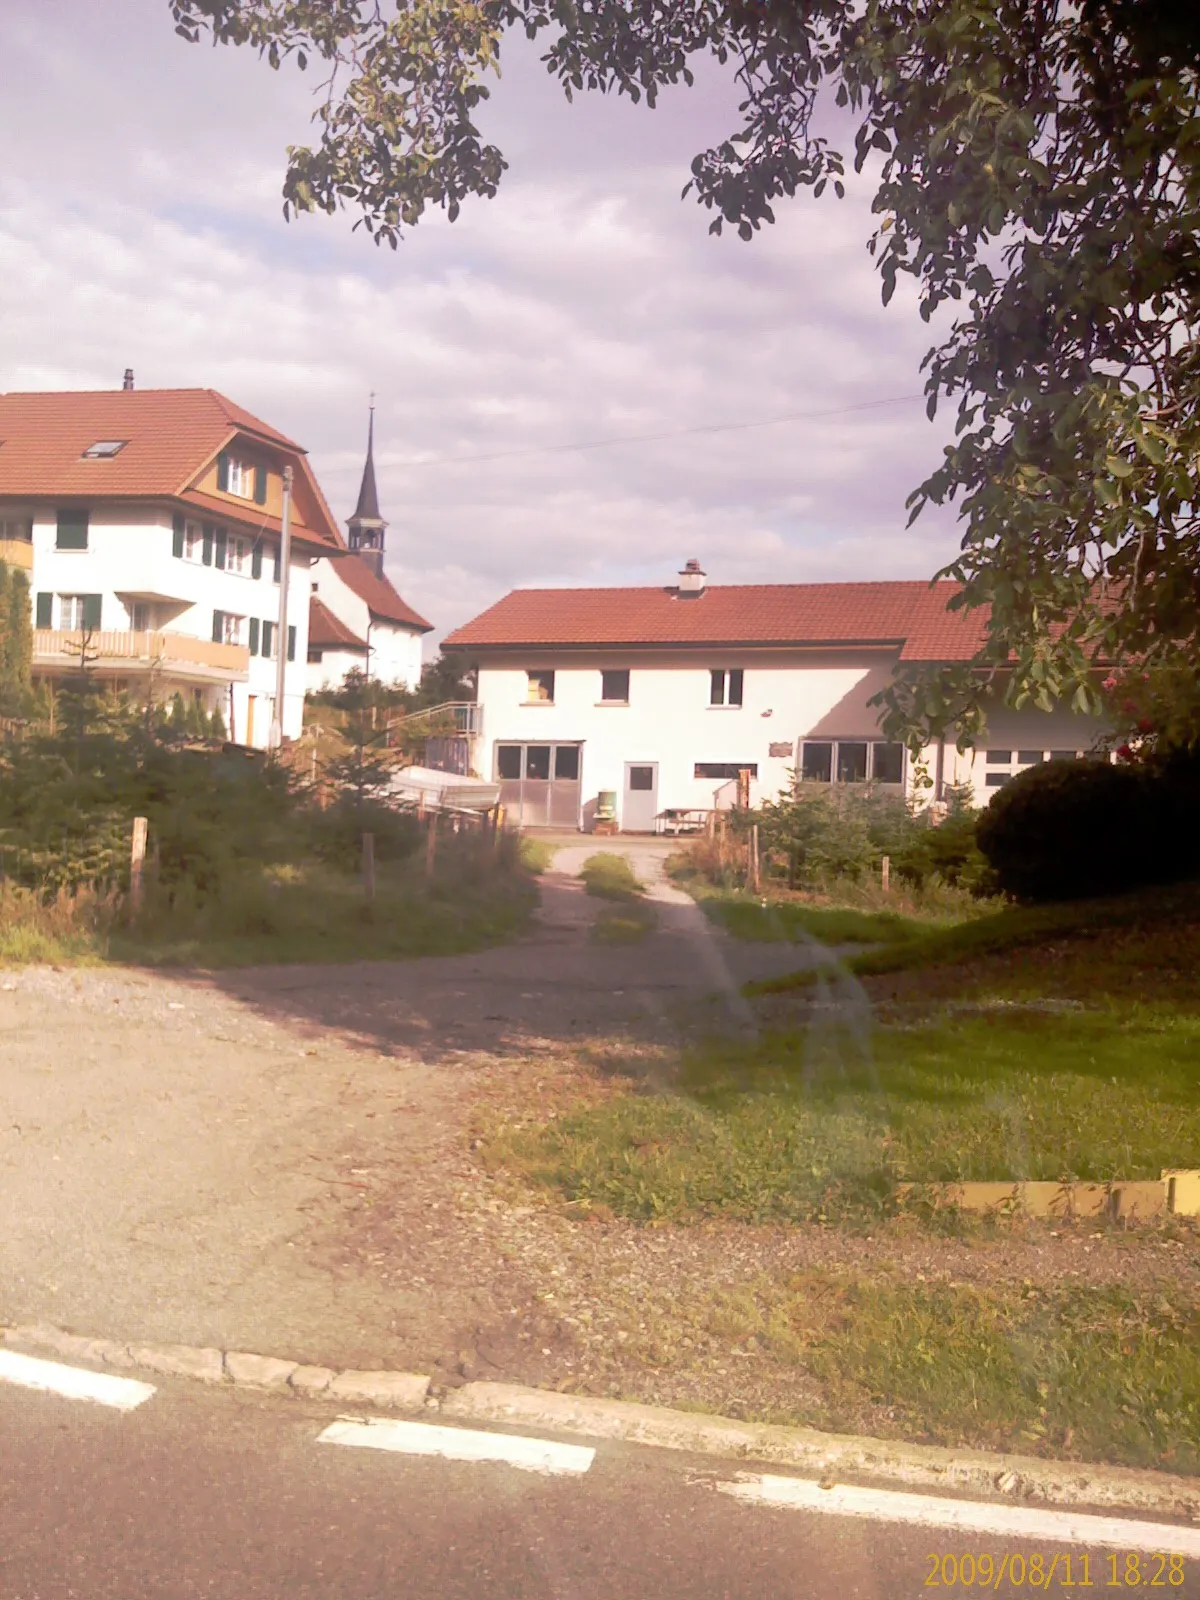 Photo showing: Tann, municipality of Schenkon, canton of Luzern, Switzerland